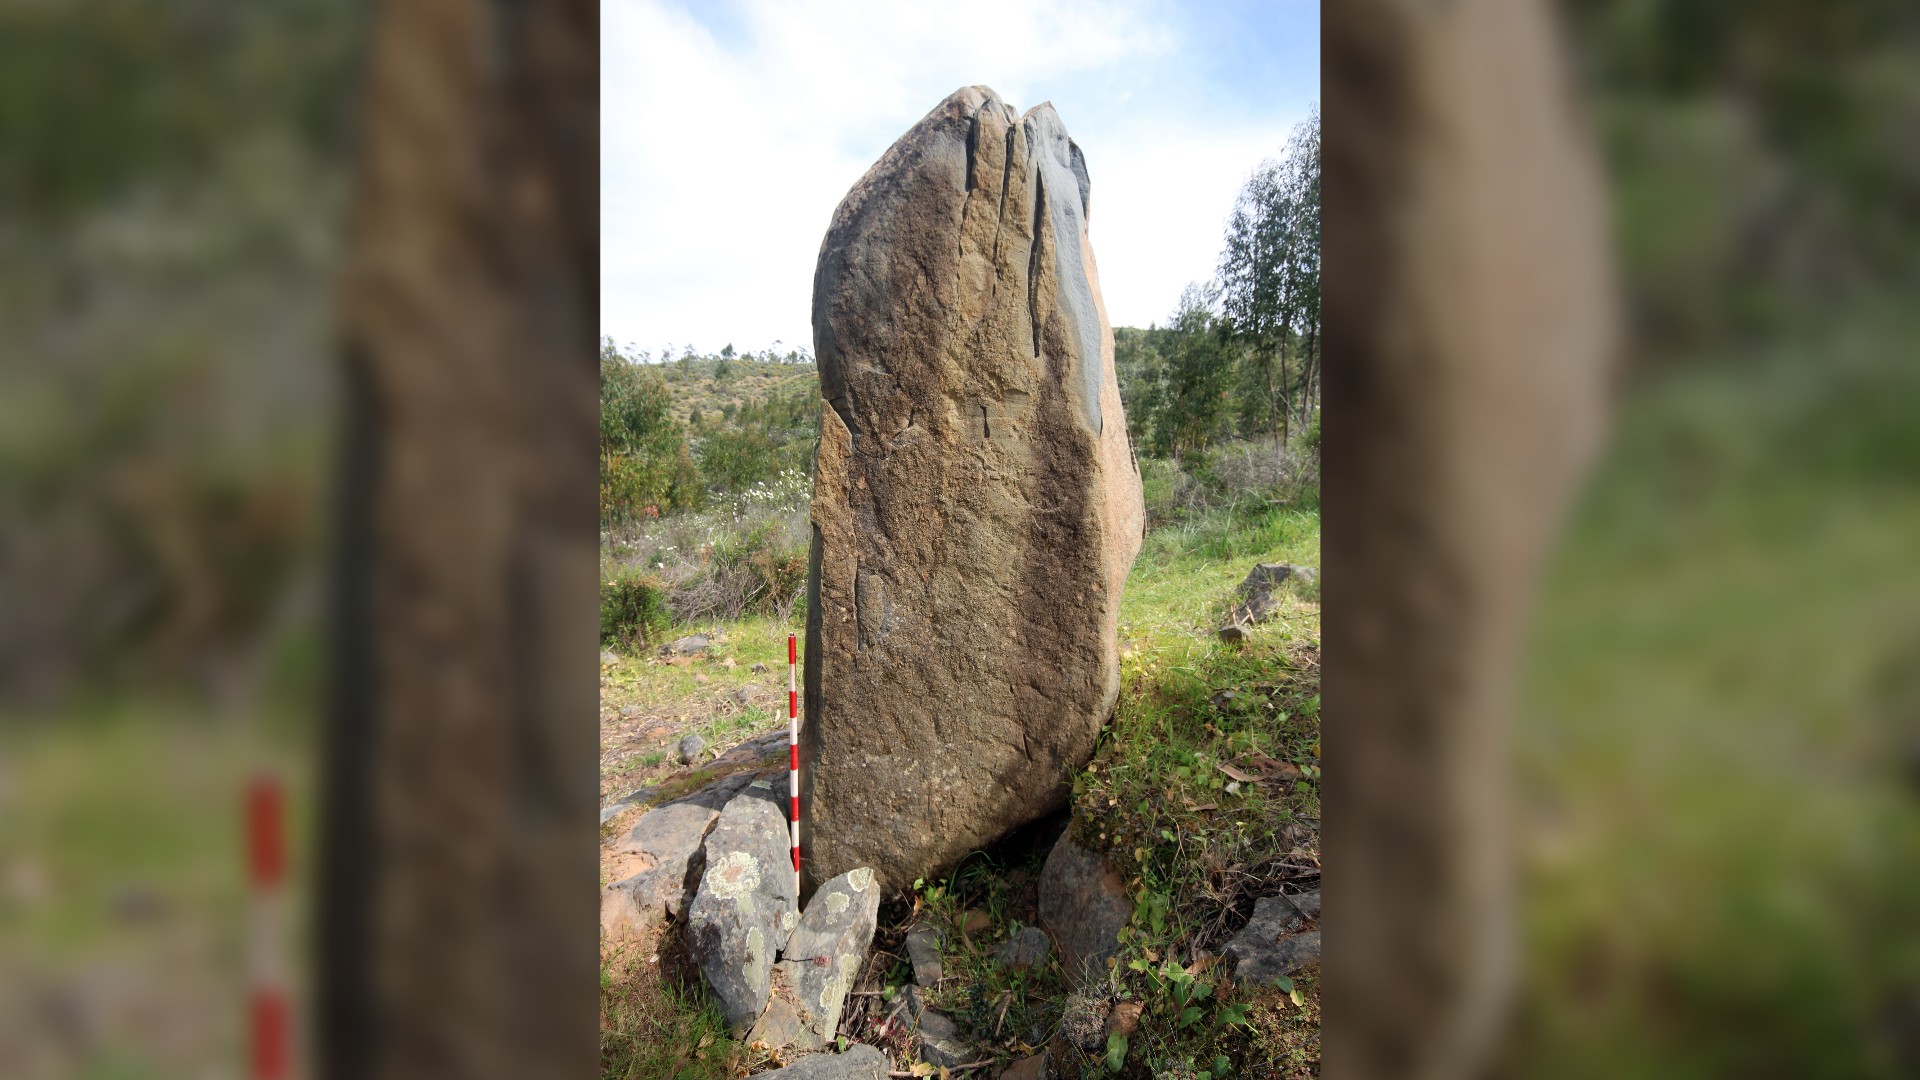 One of 526 standing stones found at the site of La Torre-La Janera, near Huelva in southwestern Spain.